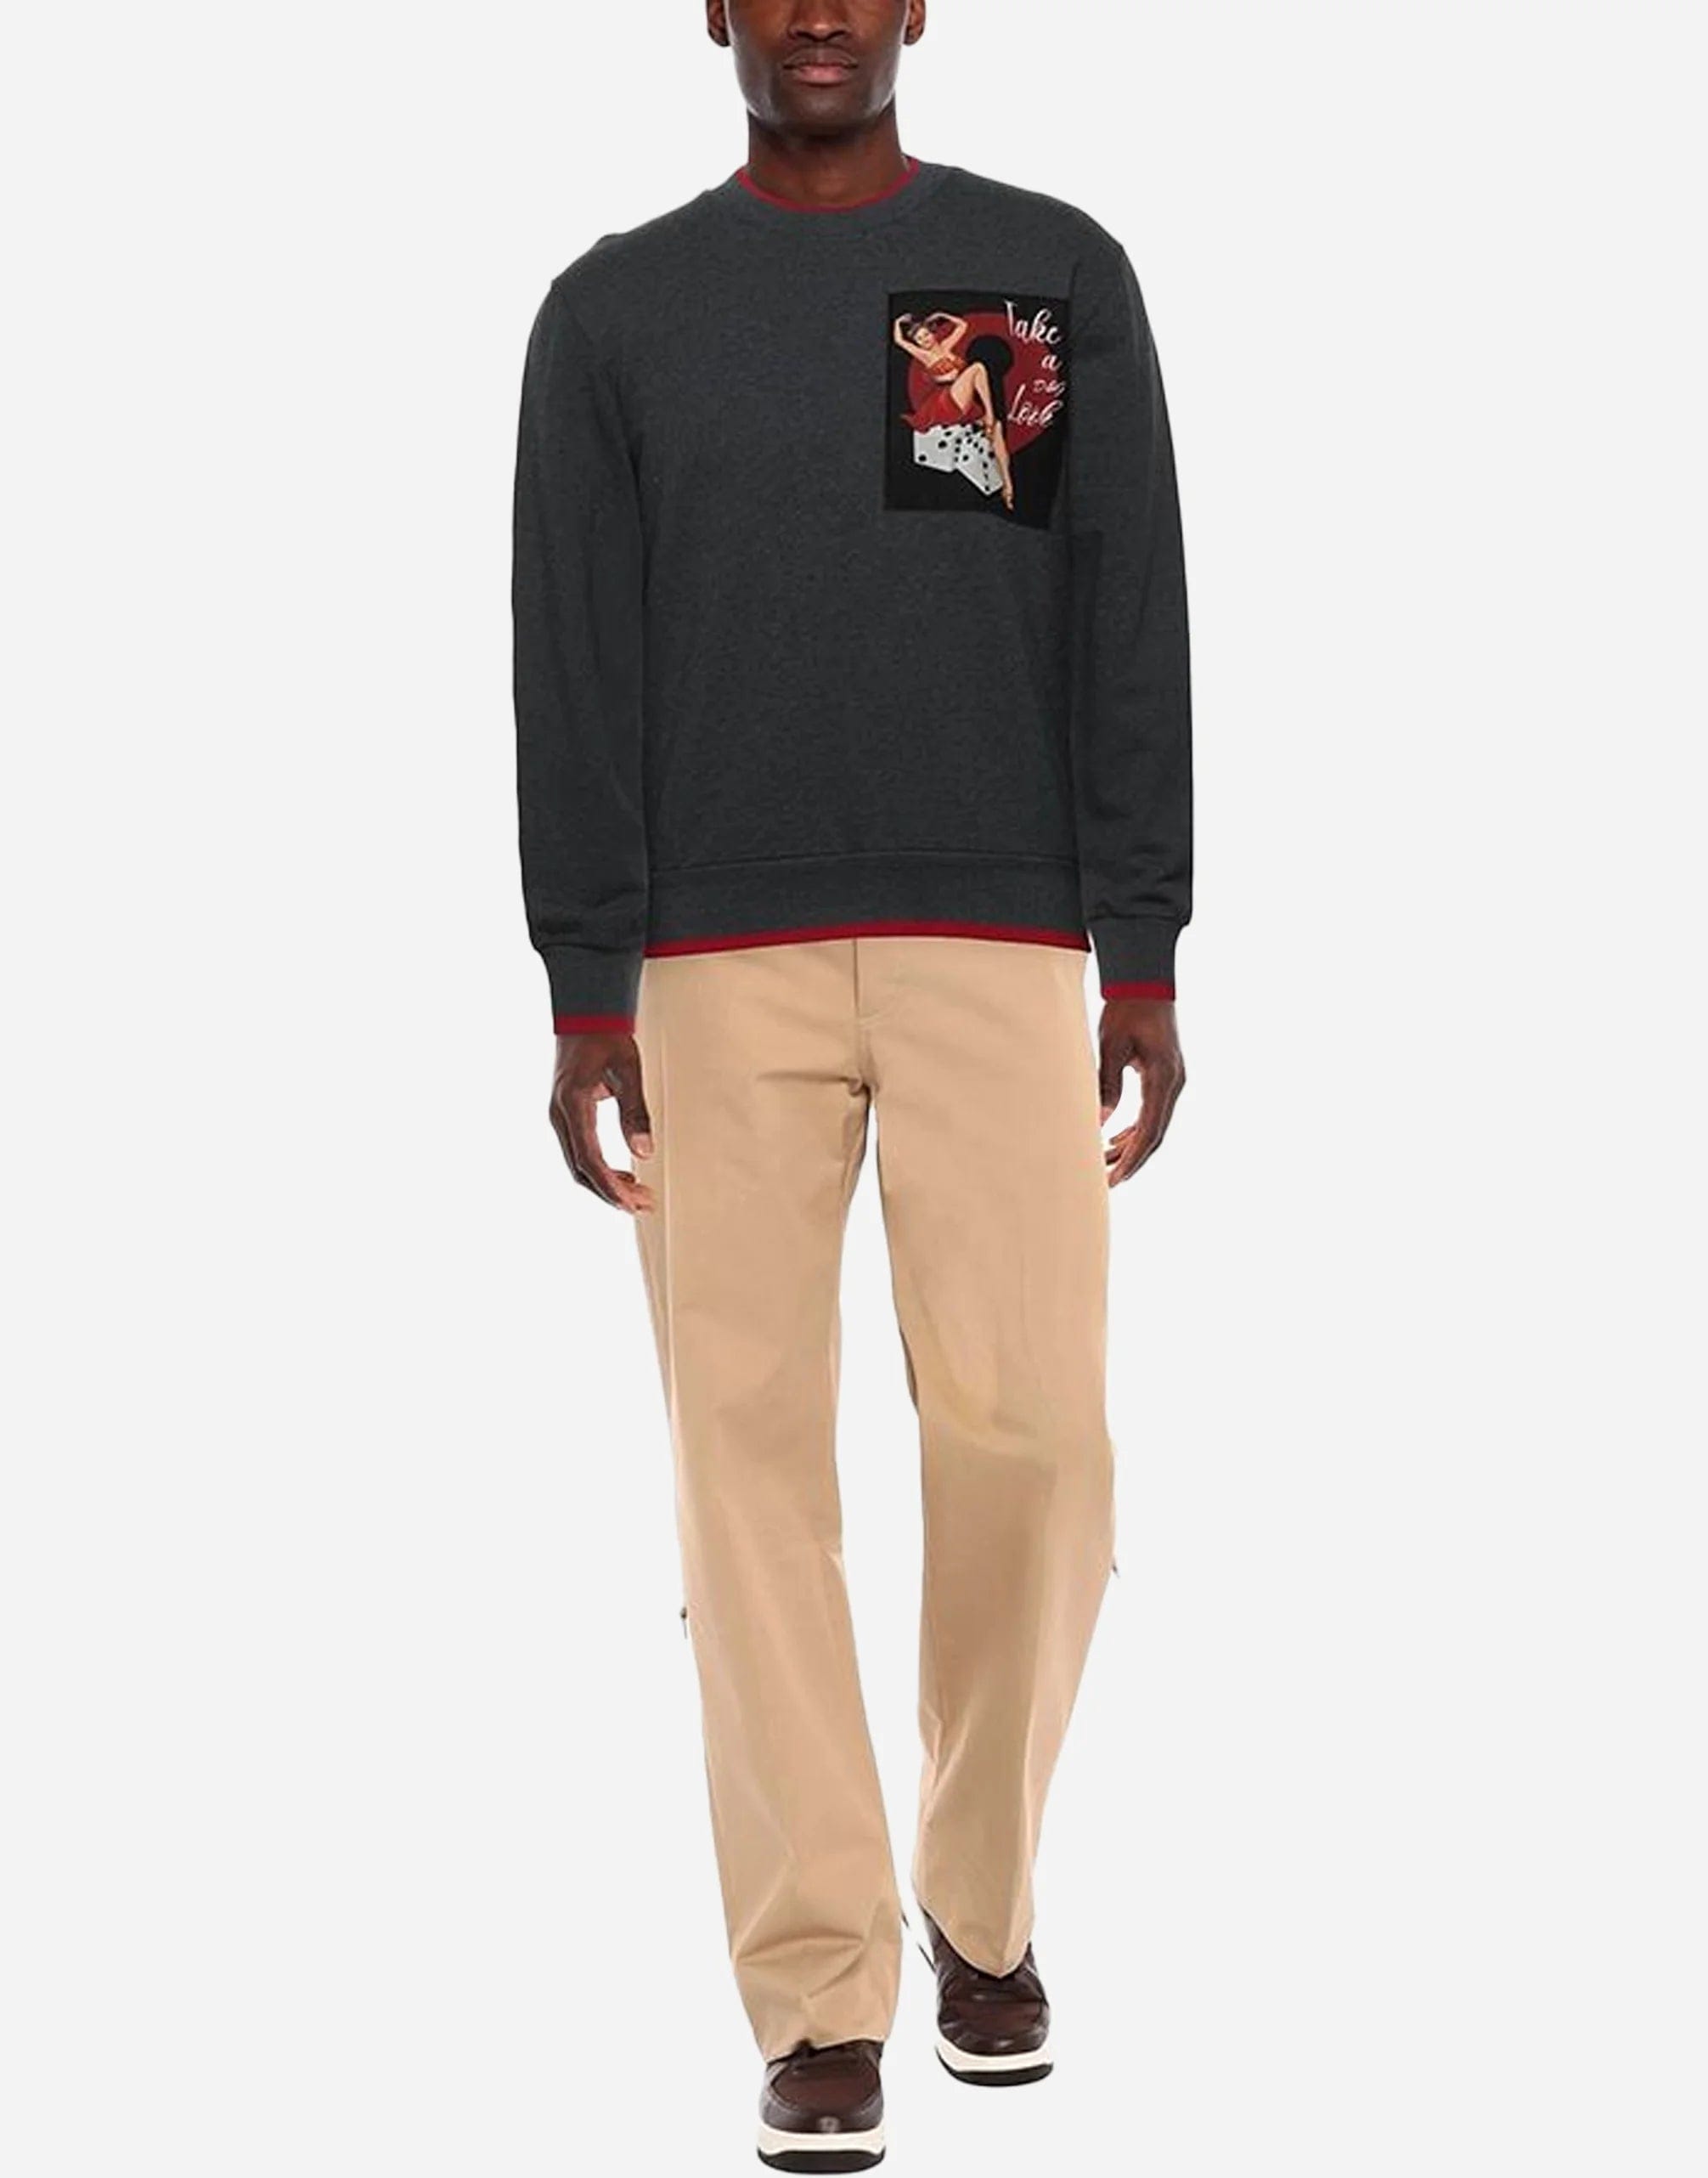 Dolce & Gabbana 'Take A DG Look' Crewneck Sweatshirt